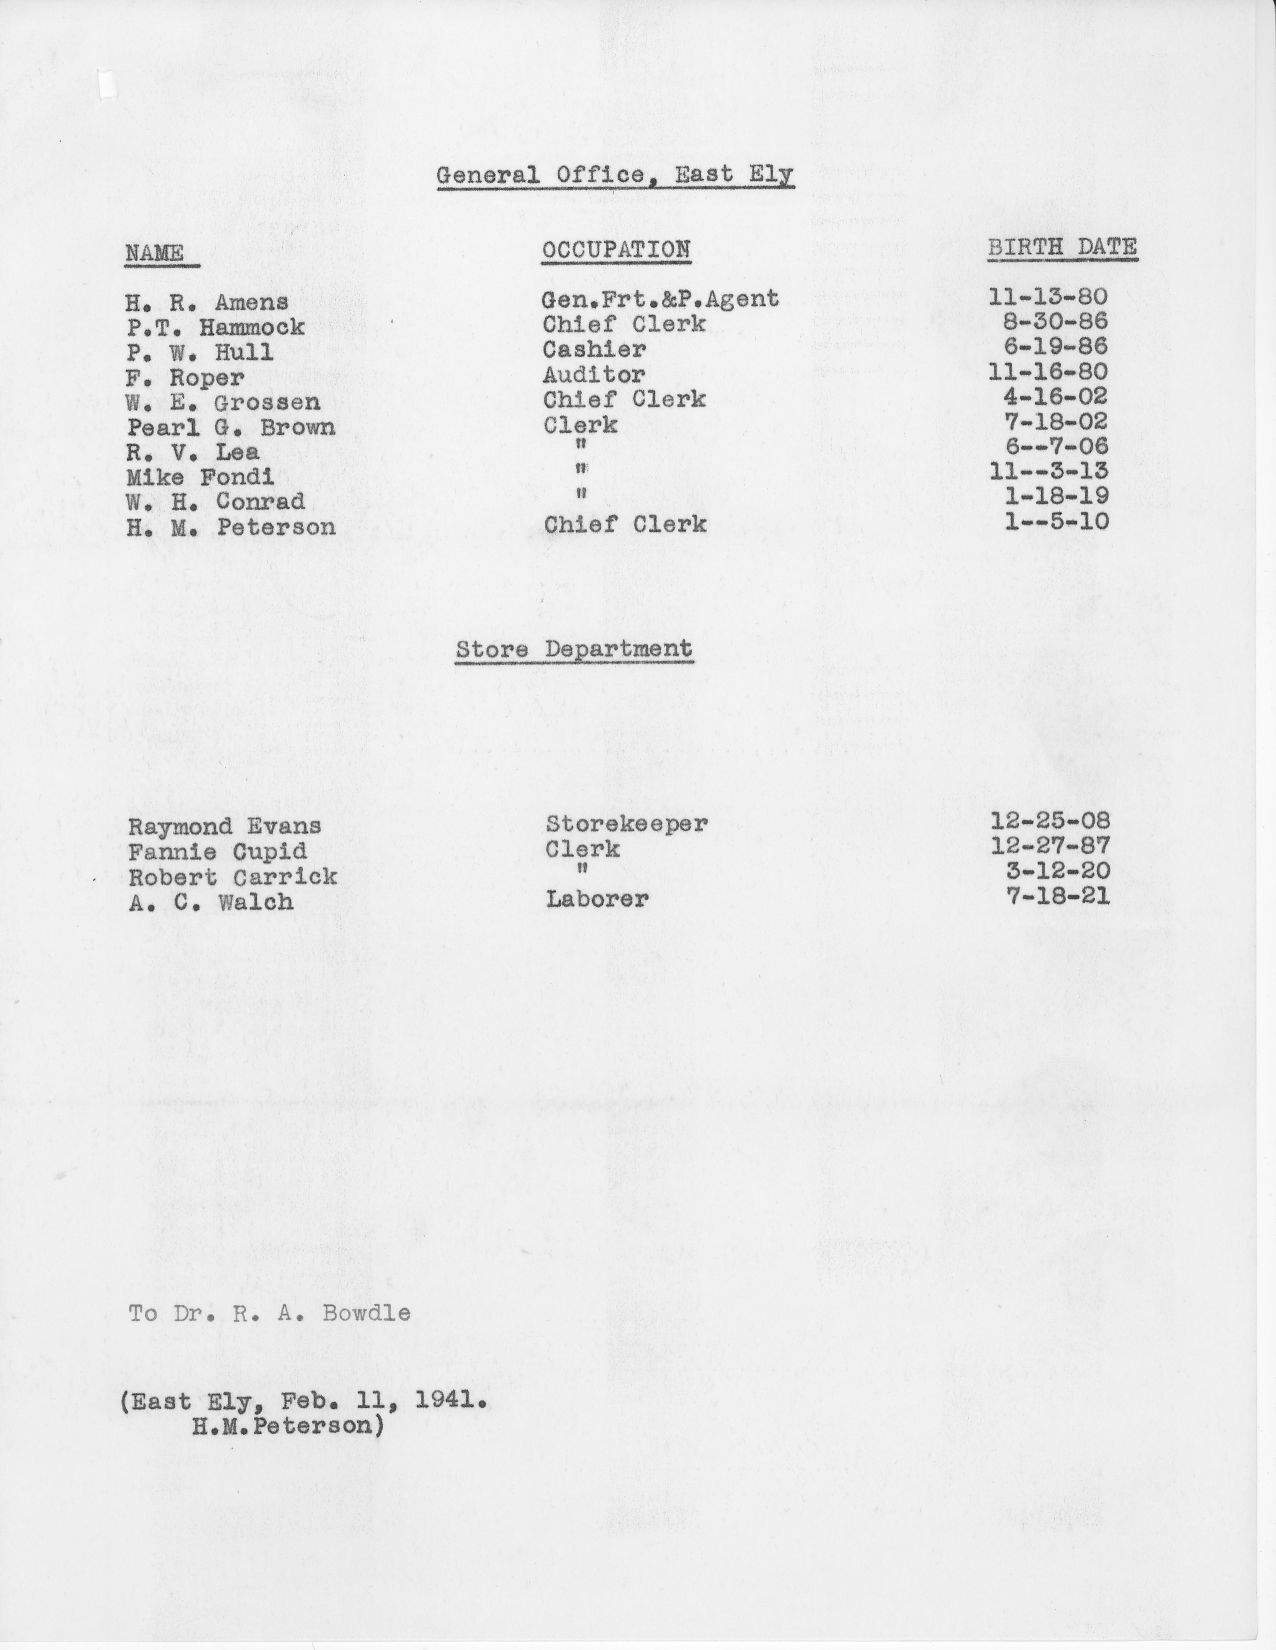 1941 Employment List (partial)